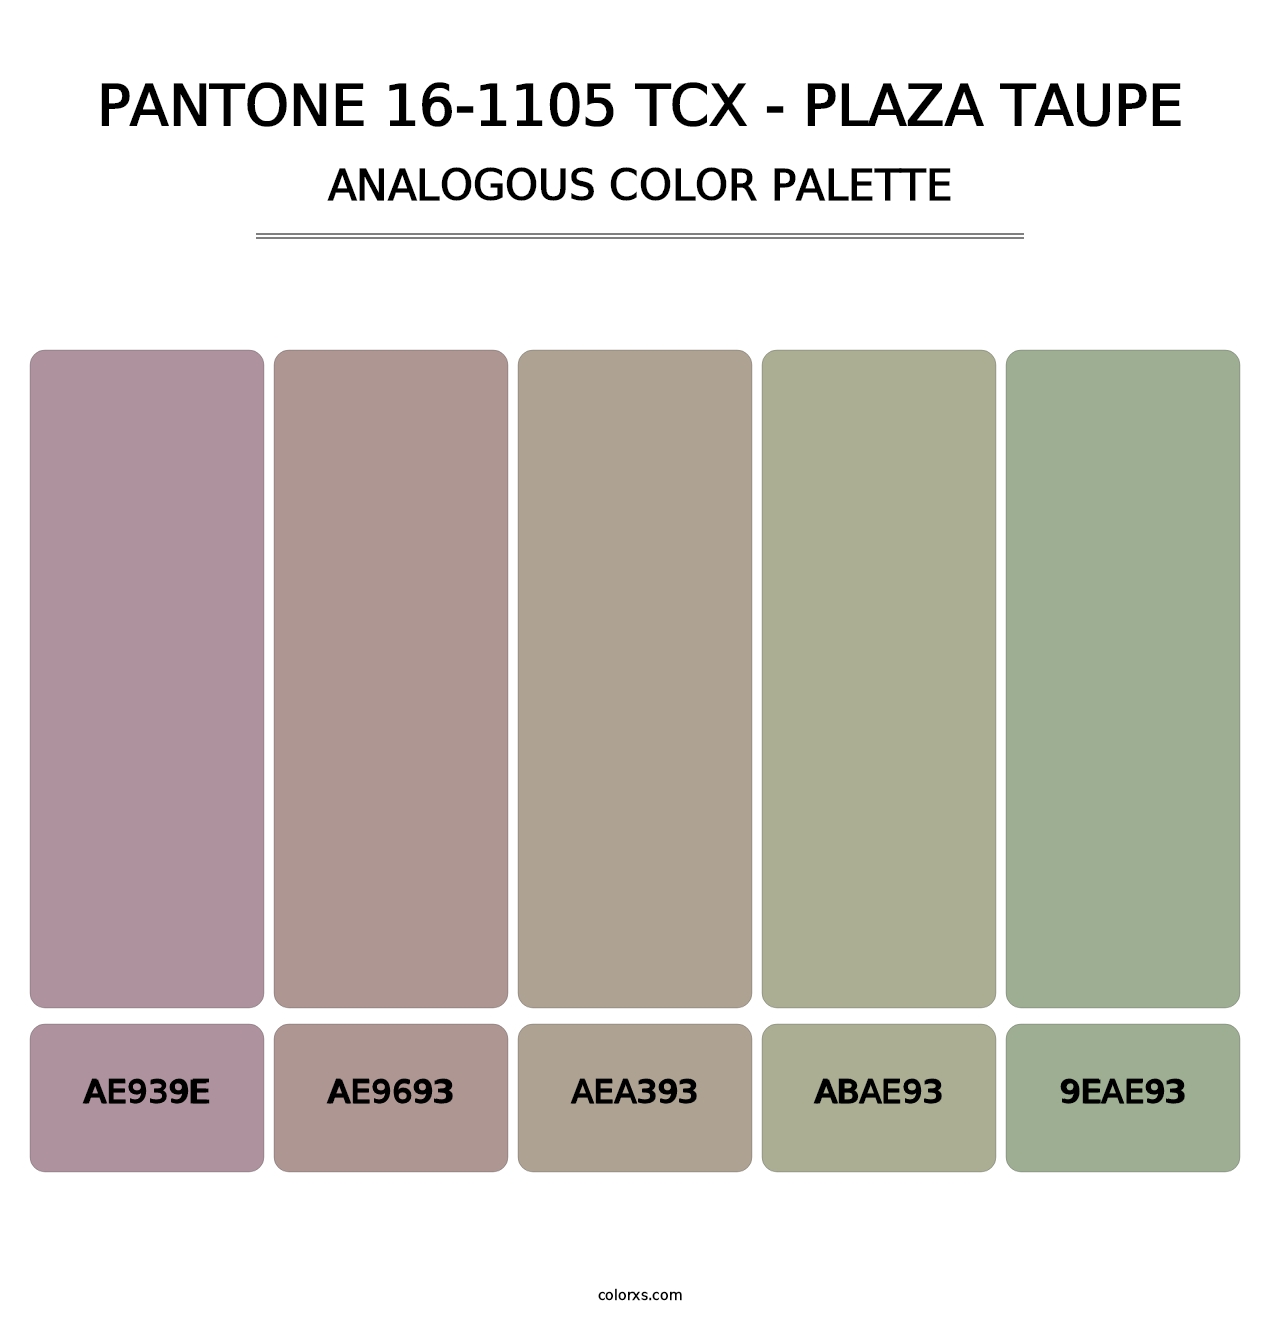 PANTONE 16-1105 TCX - Plaza Taupe - Analogous Color Palette